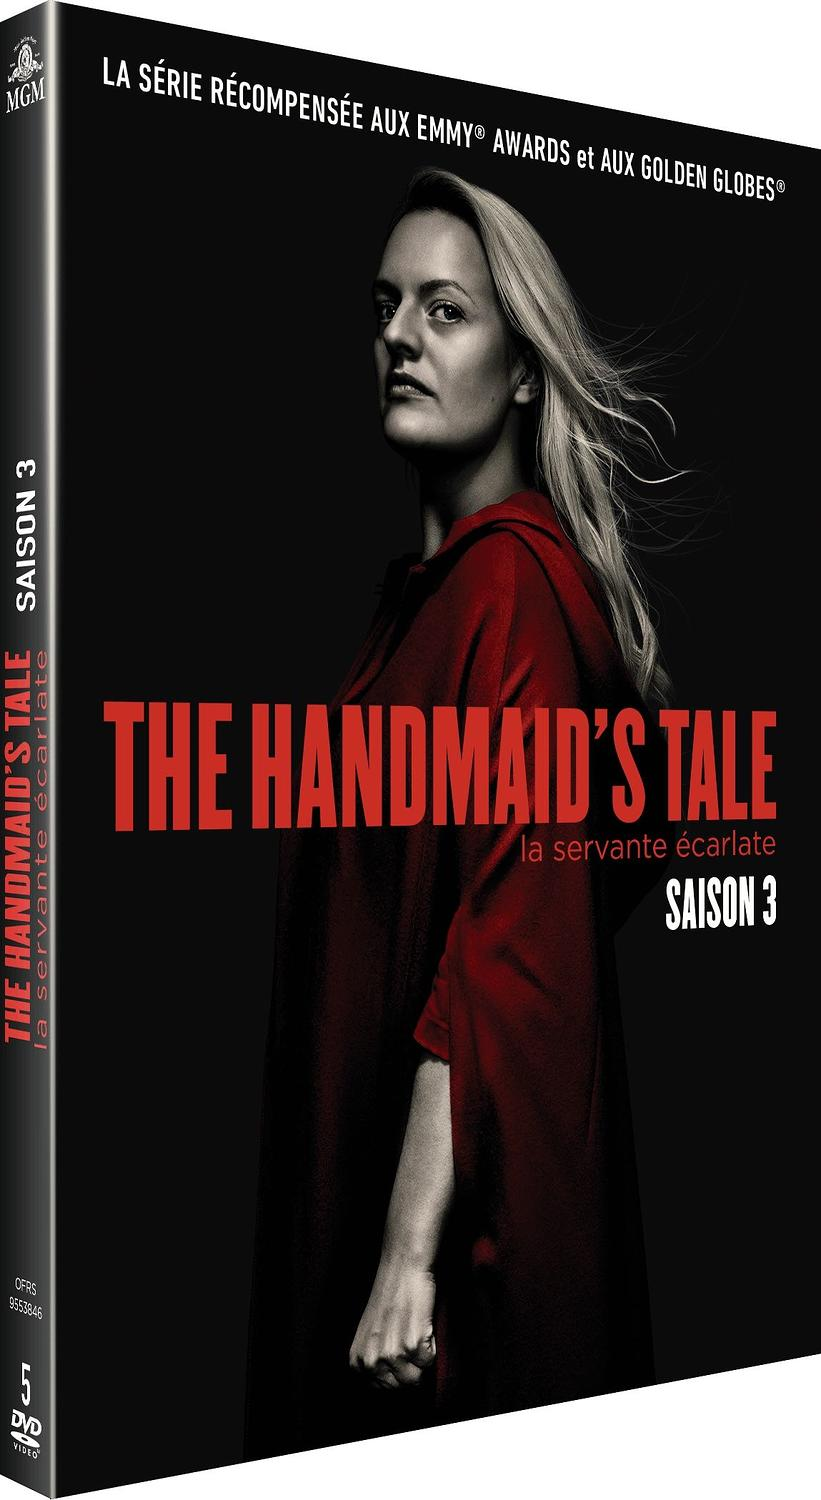 Handmaid's tale (The) - La servante écarlate - Saison 3